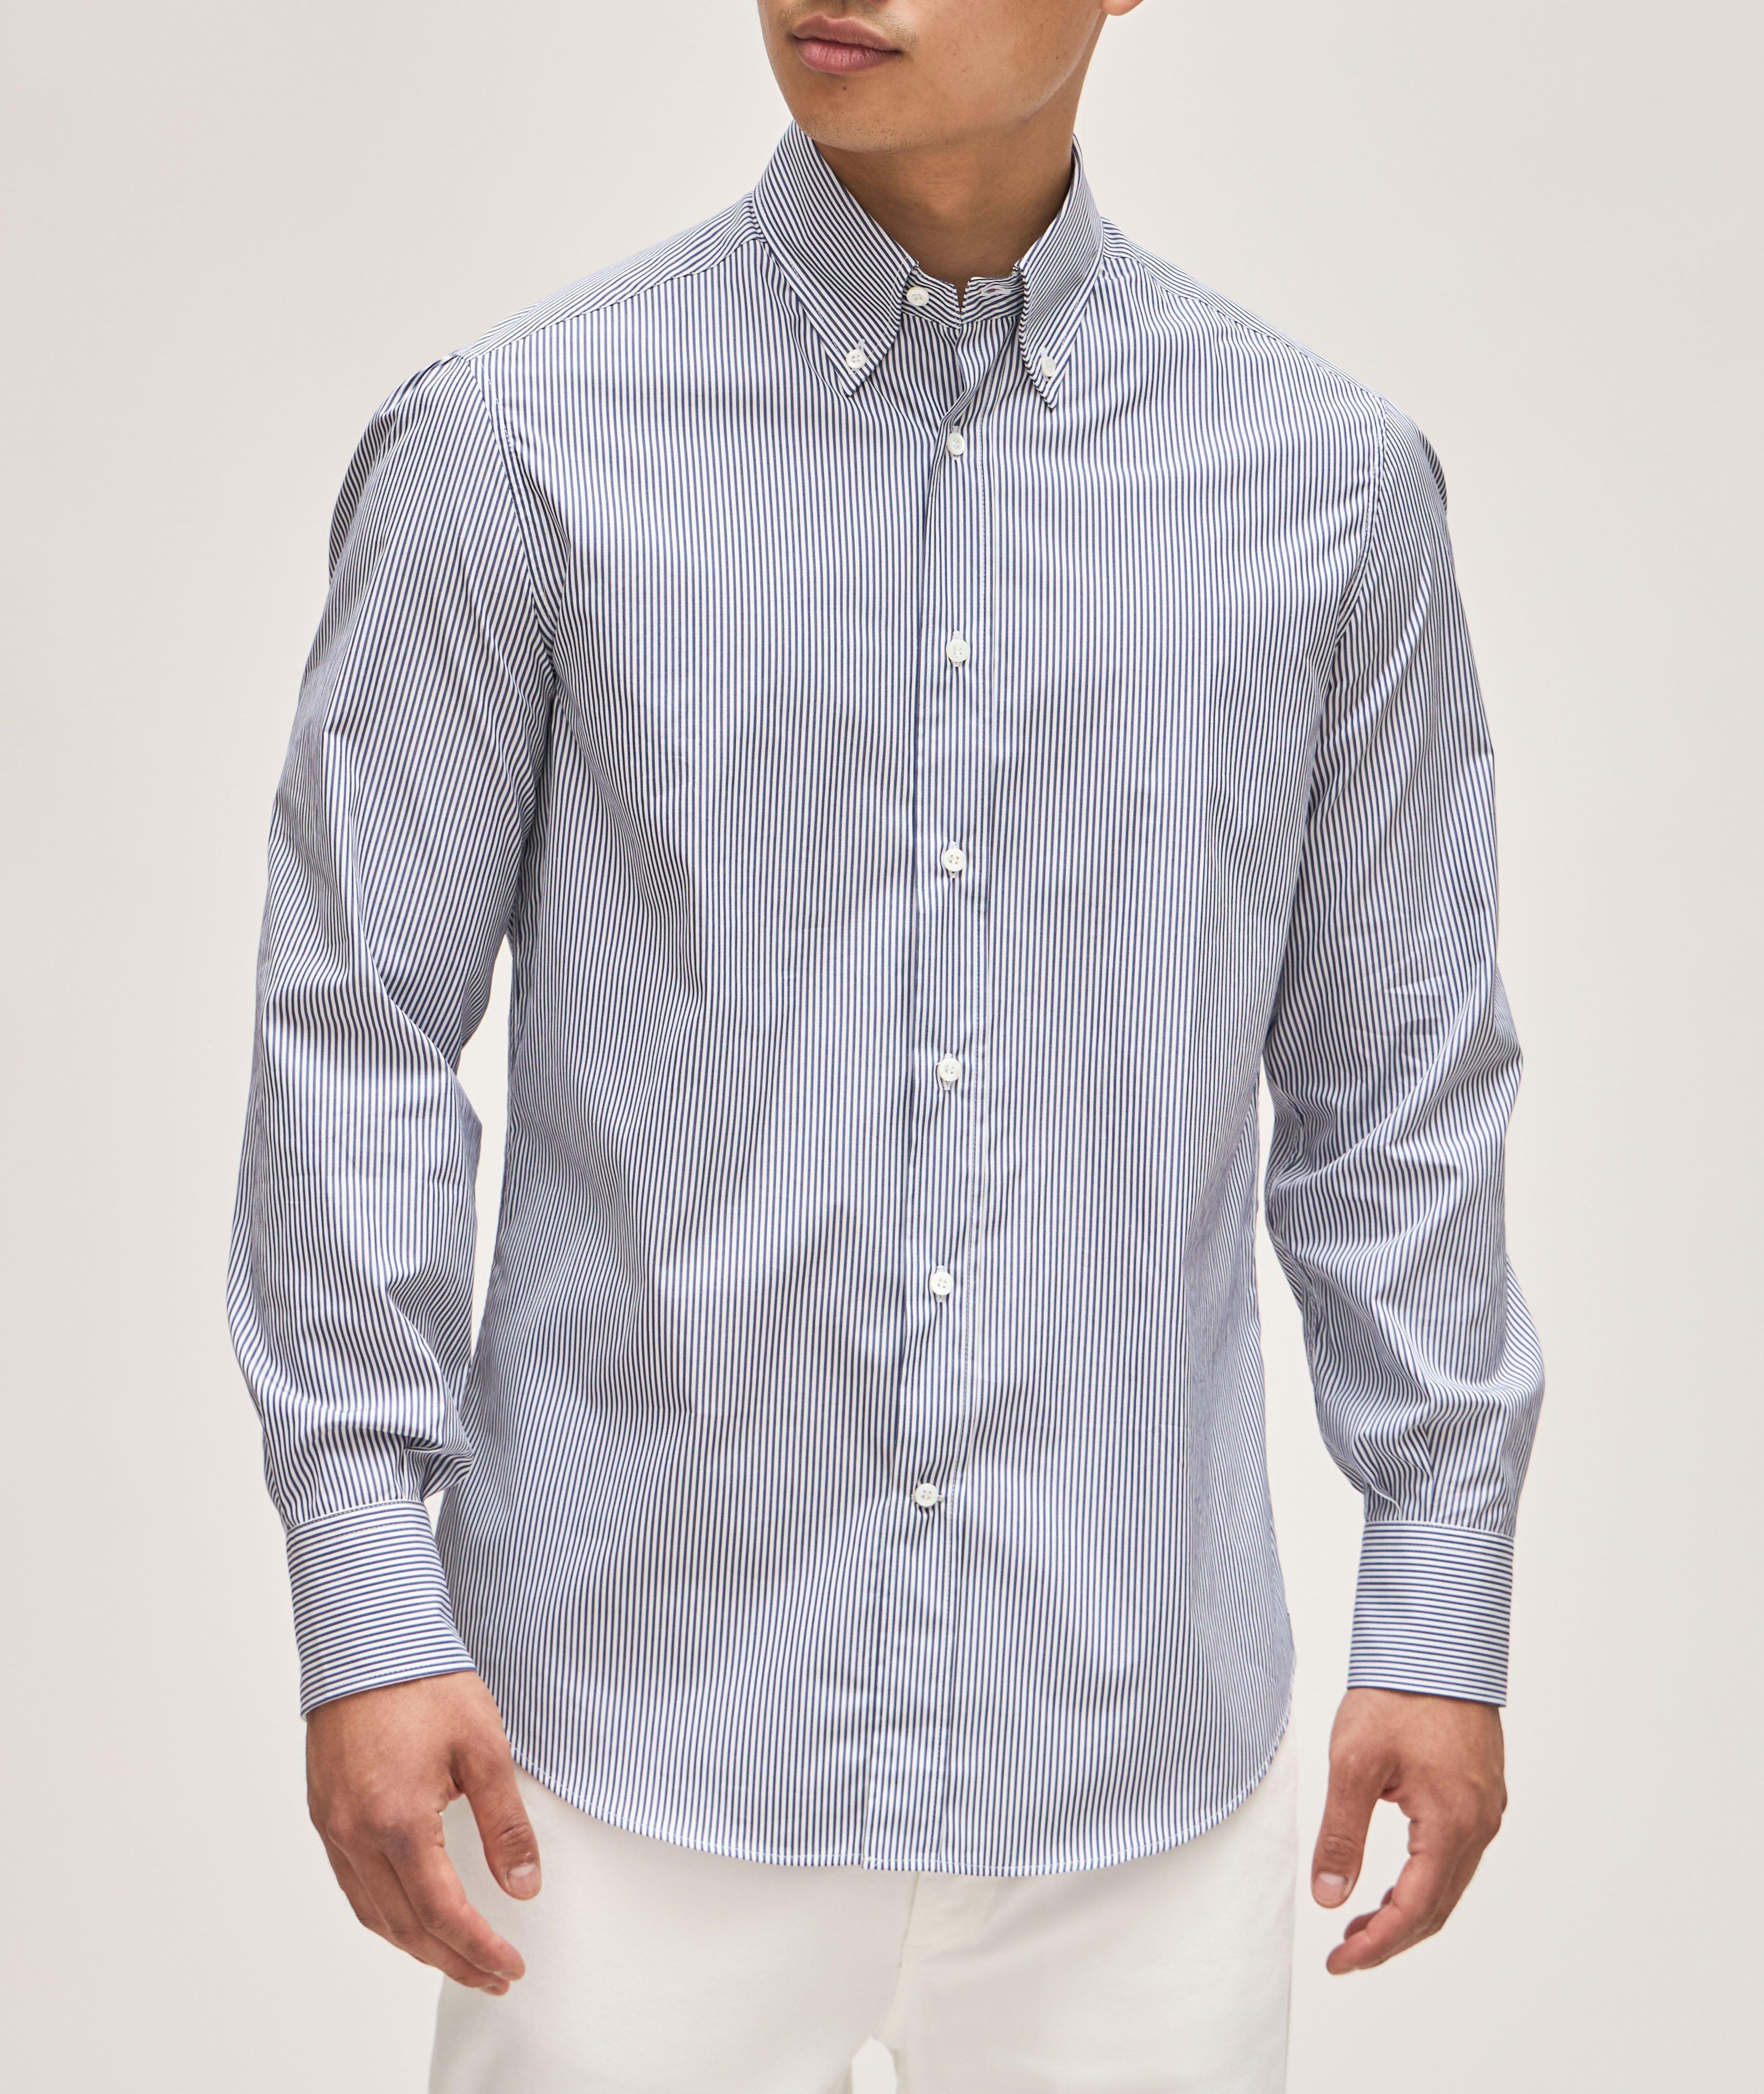 Basic Fit Striped Oxford Cotton Sport Shirt  image 1